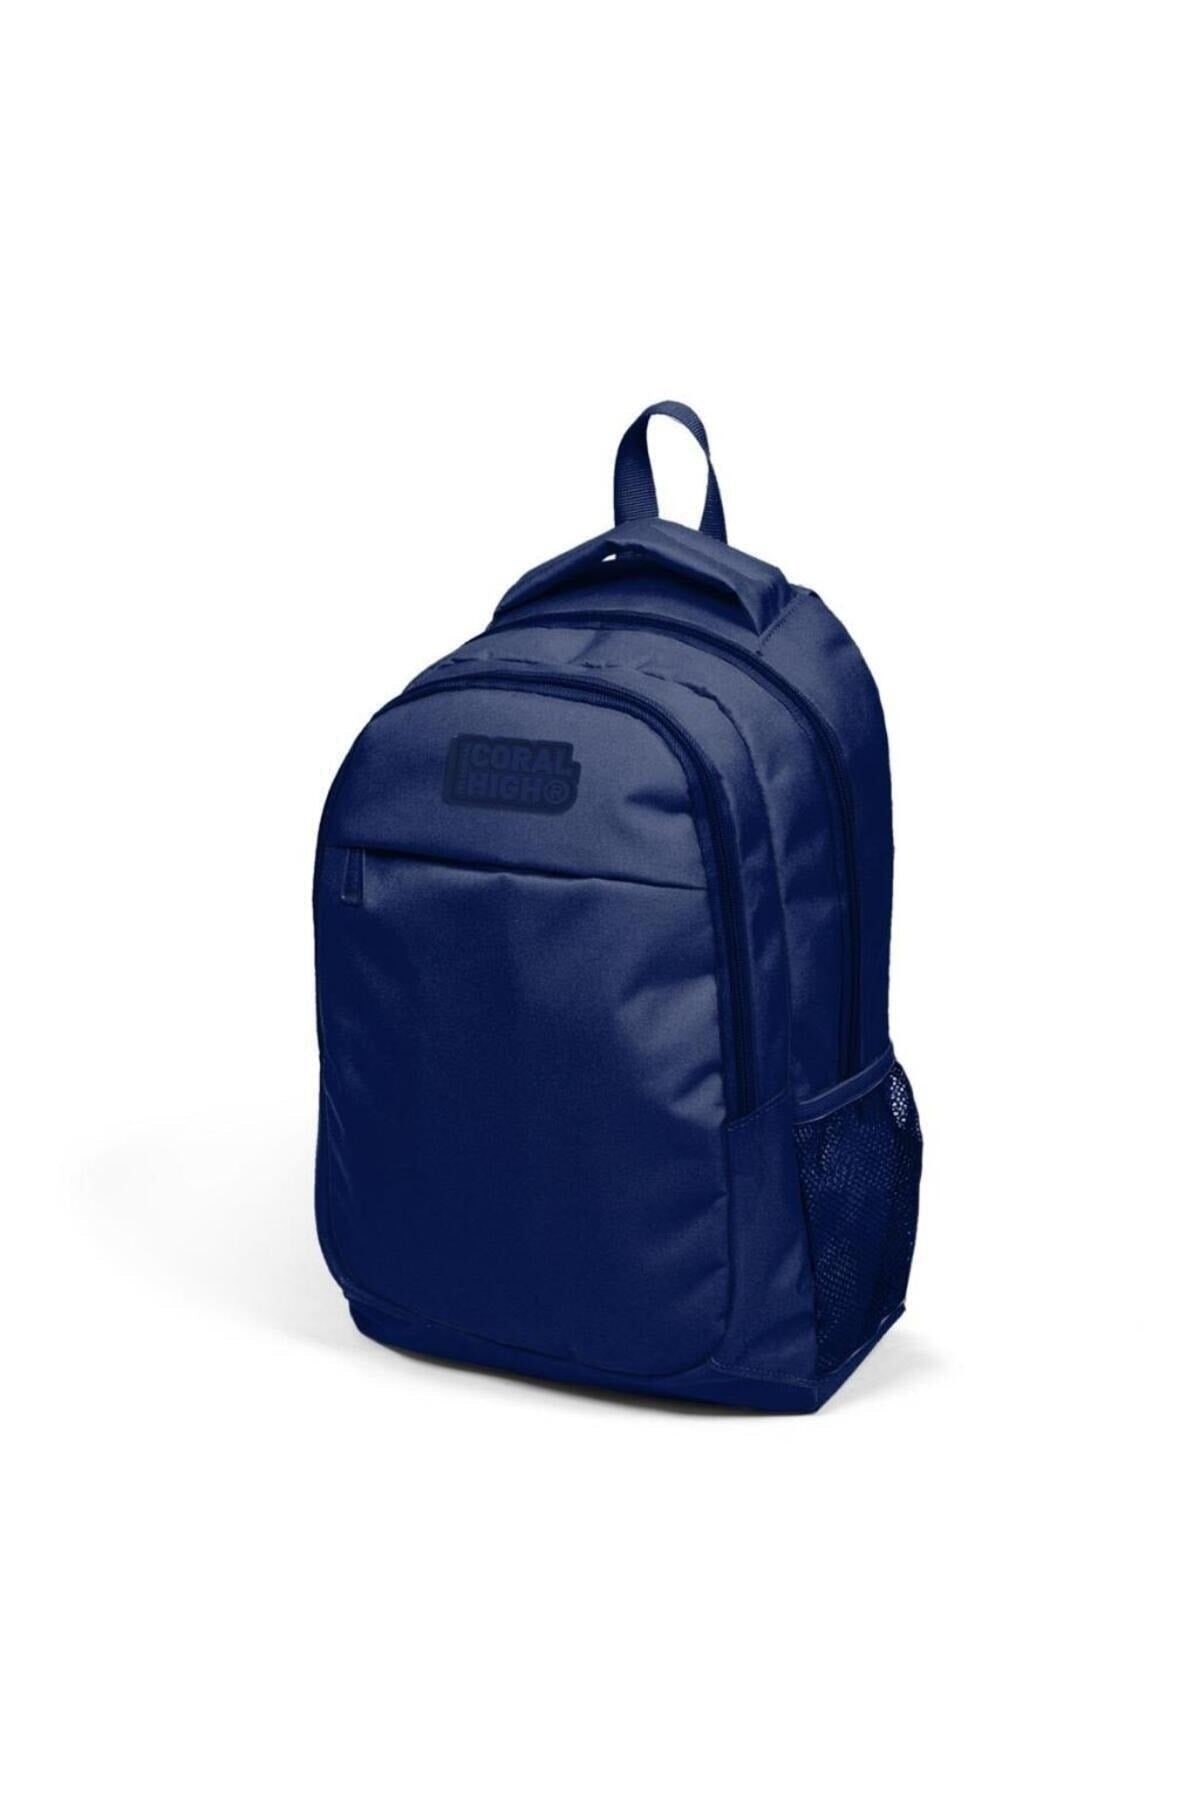 Kids Navy Blue 3-Piece School Bag Set GOSET0114399